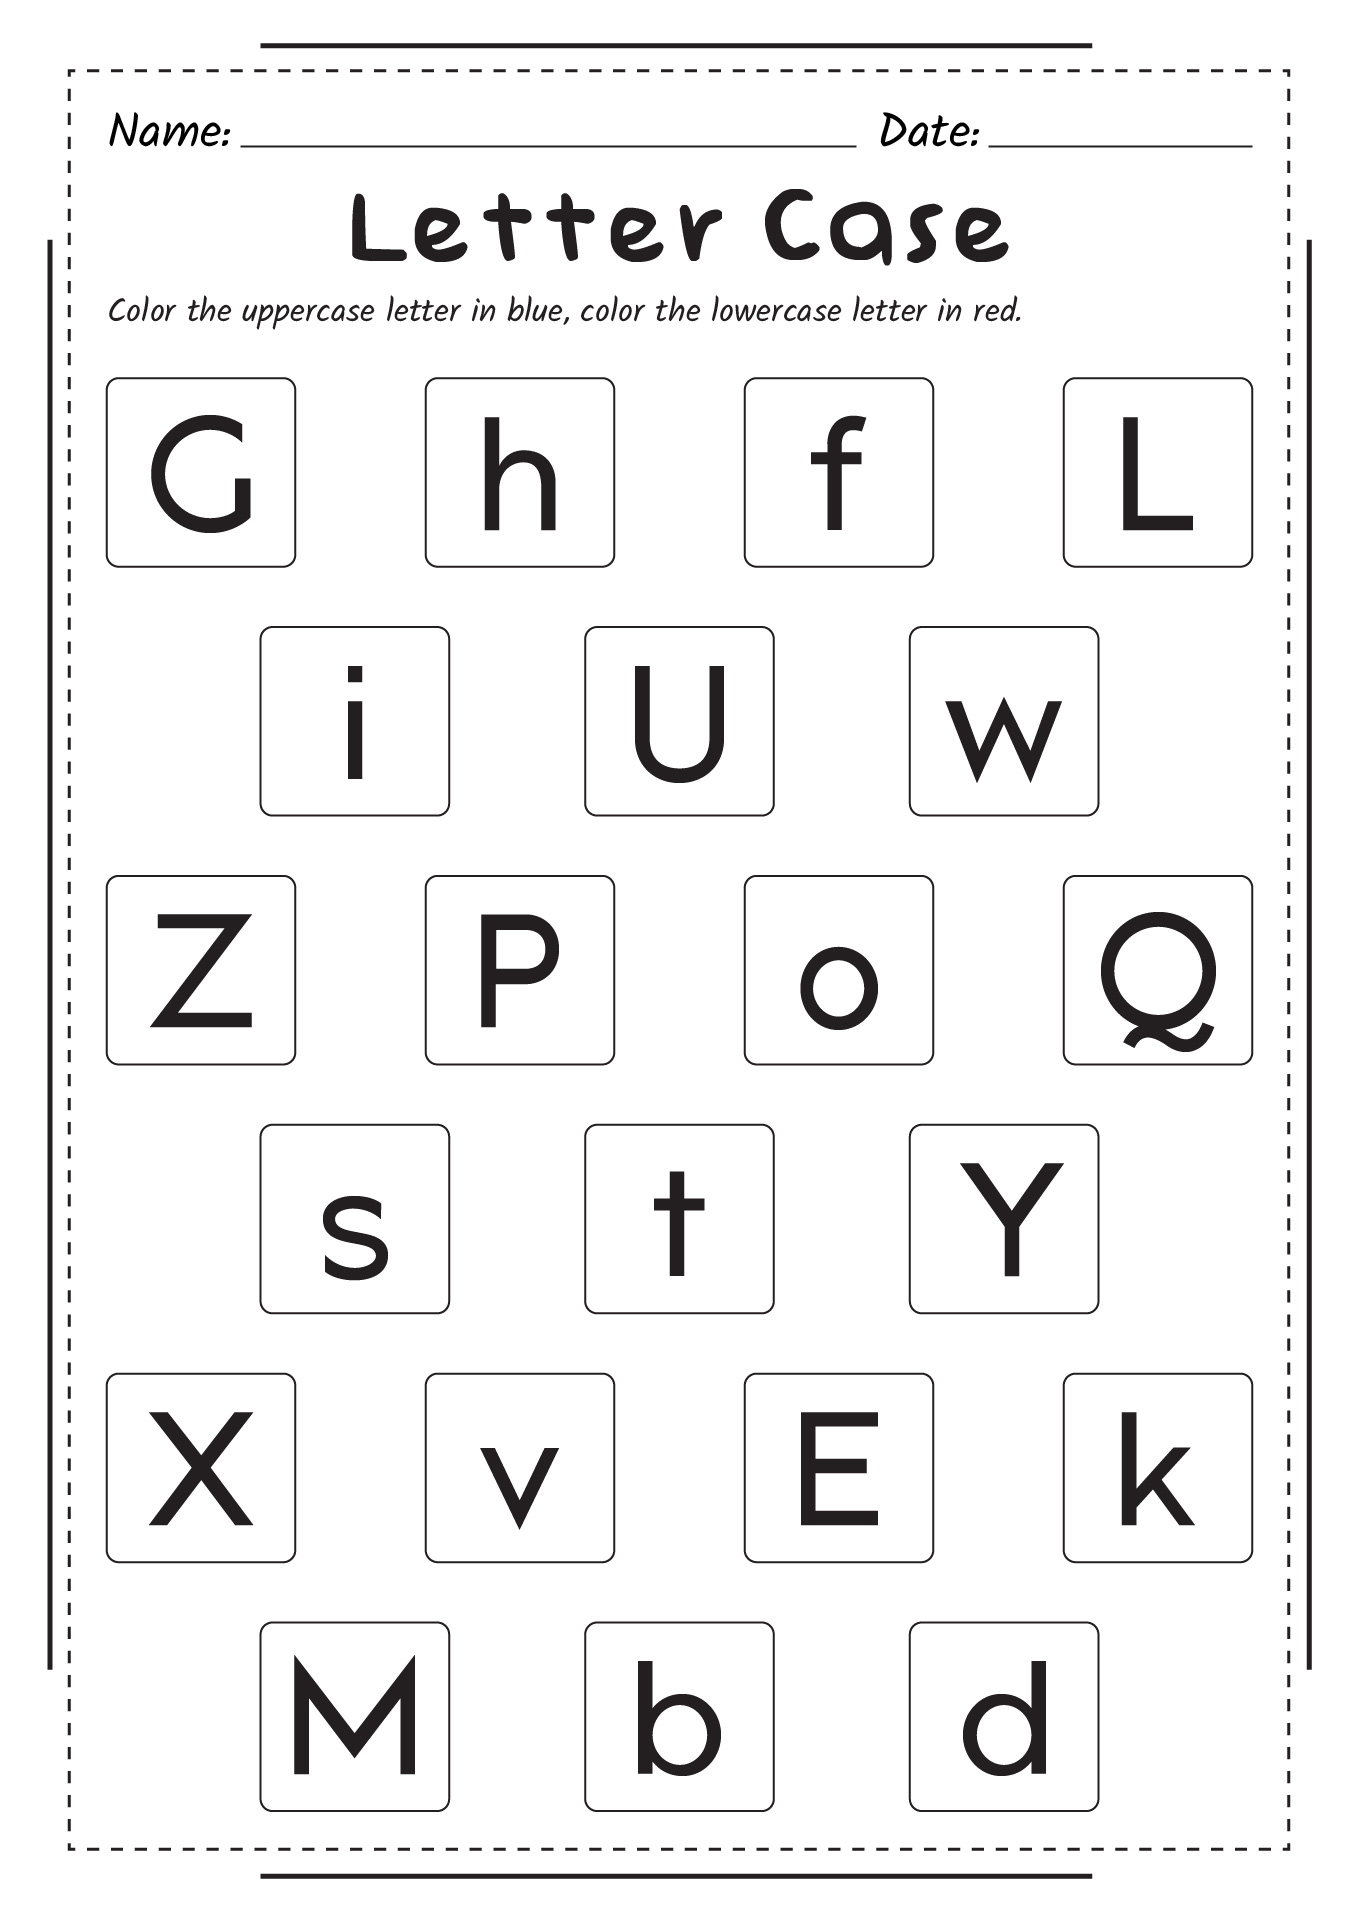 8 Blank Alphabet Handwriting Worksheets - Free PDF at worksheeto.com